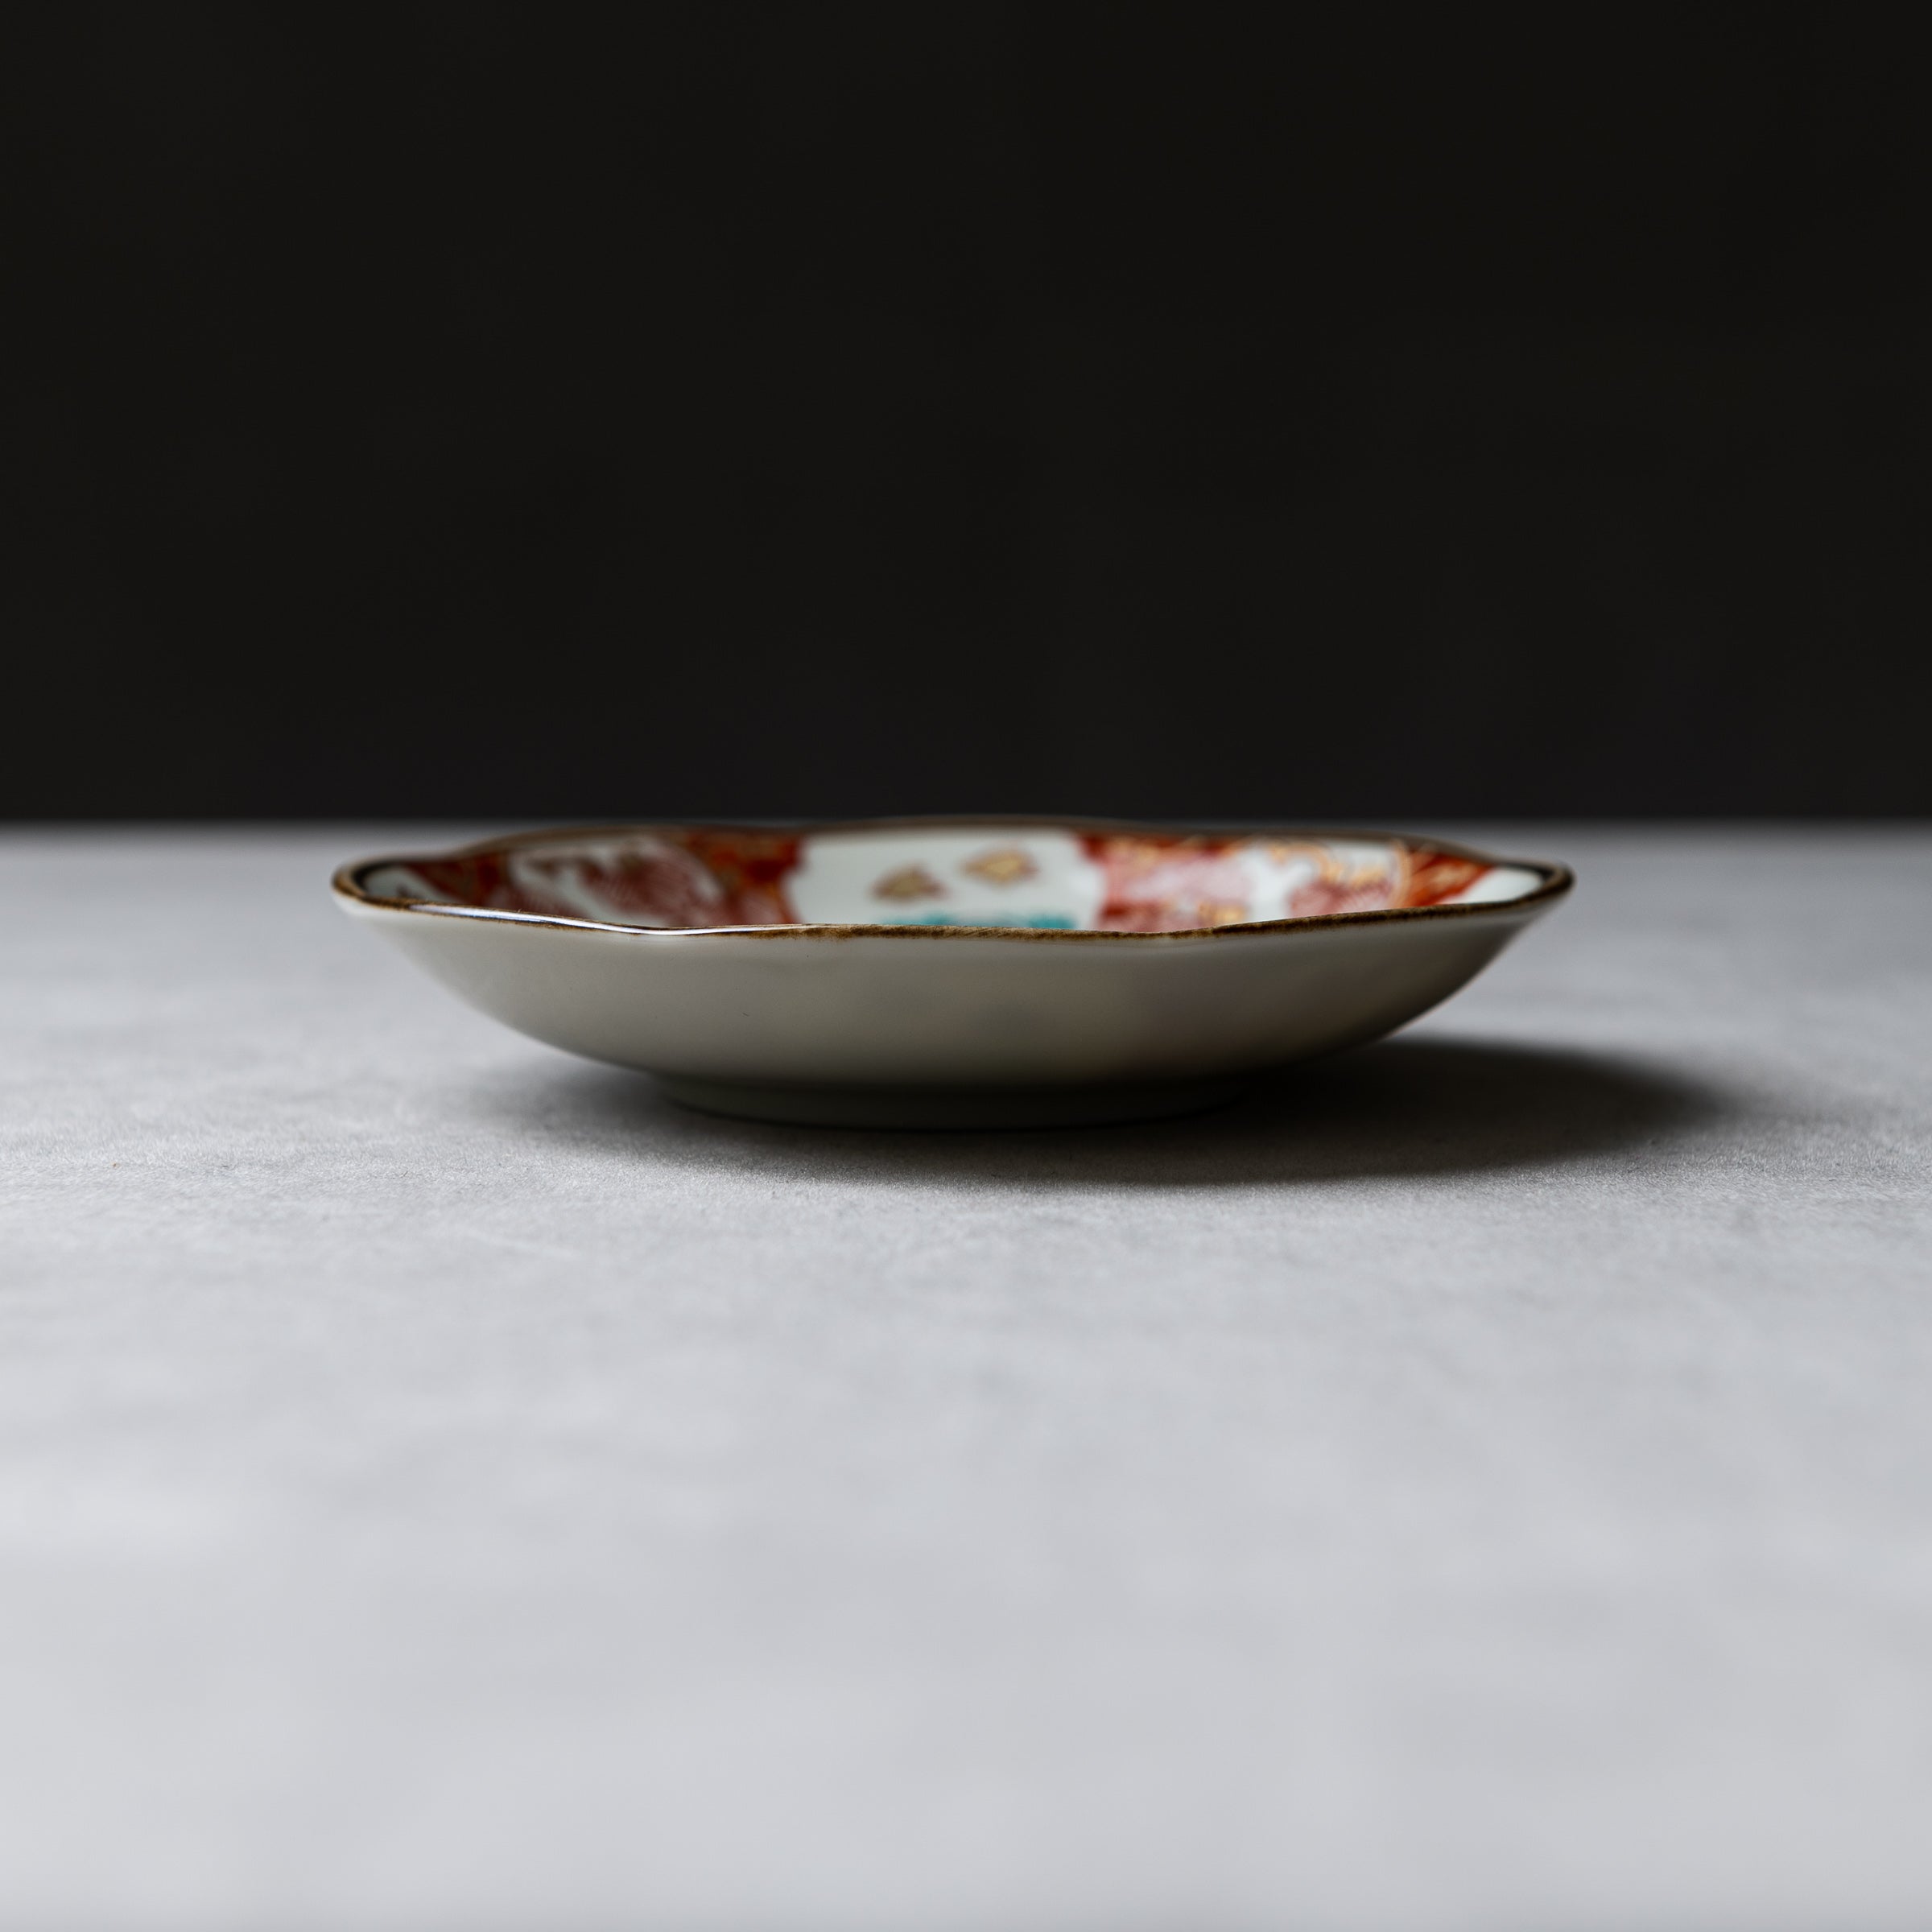 Fuka Koimari Small Serving Plate Gift Set - Set of 5 / 染錦古伊万里小皿セット